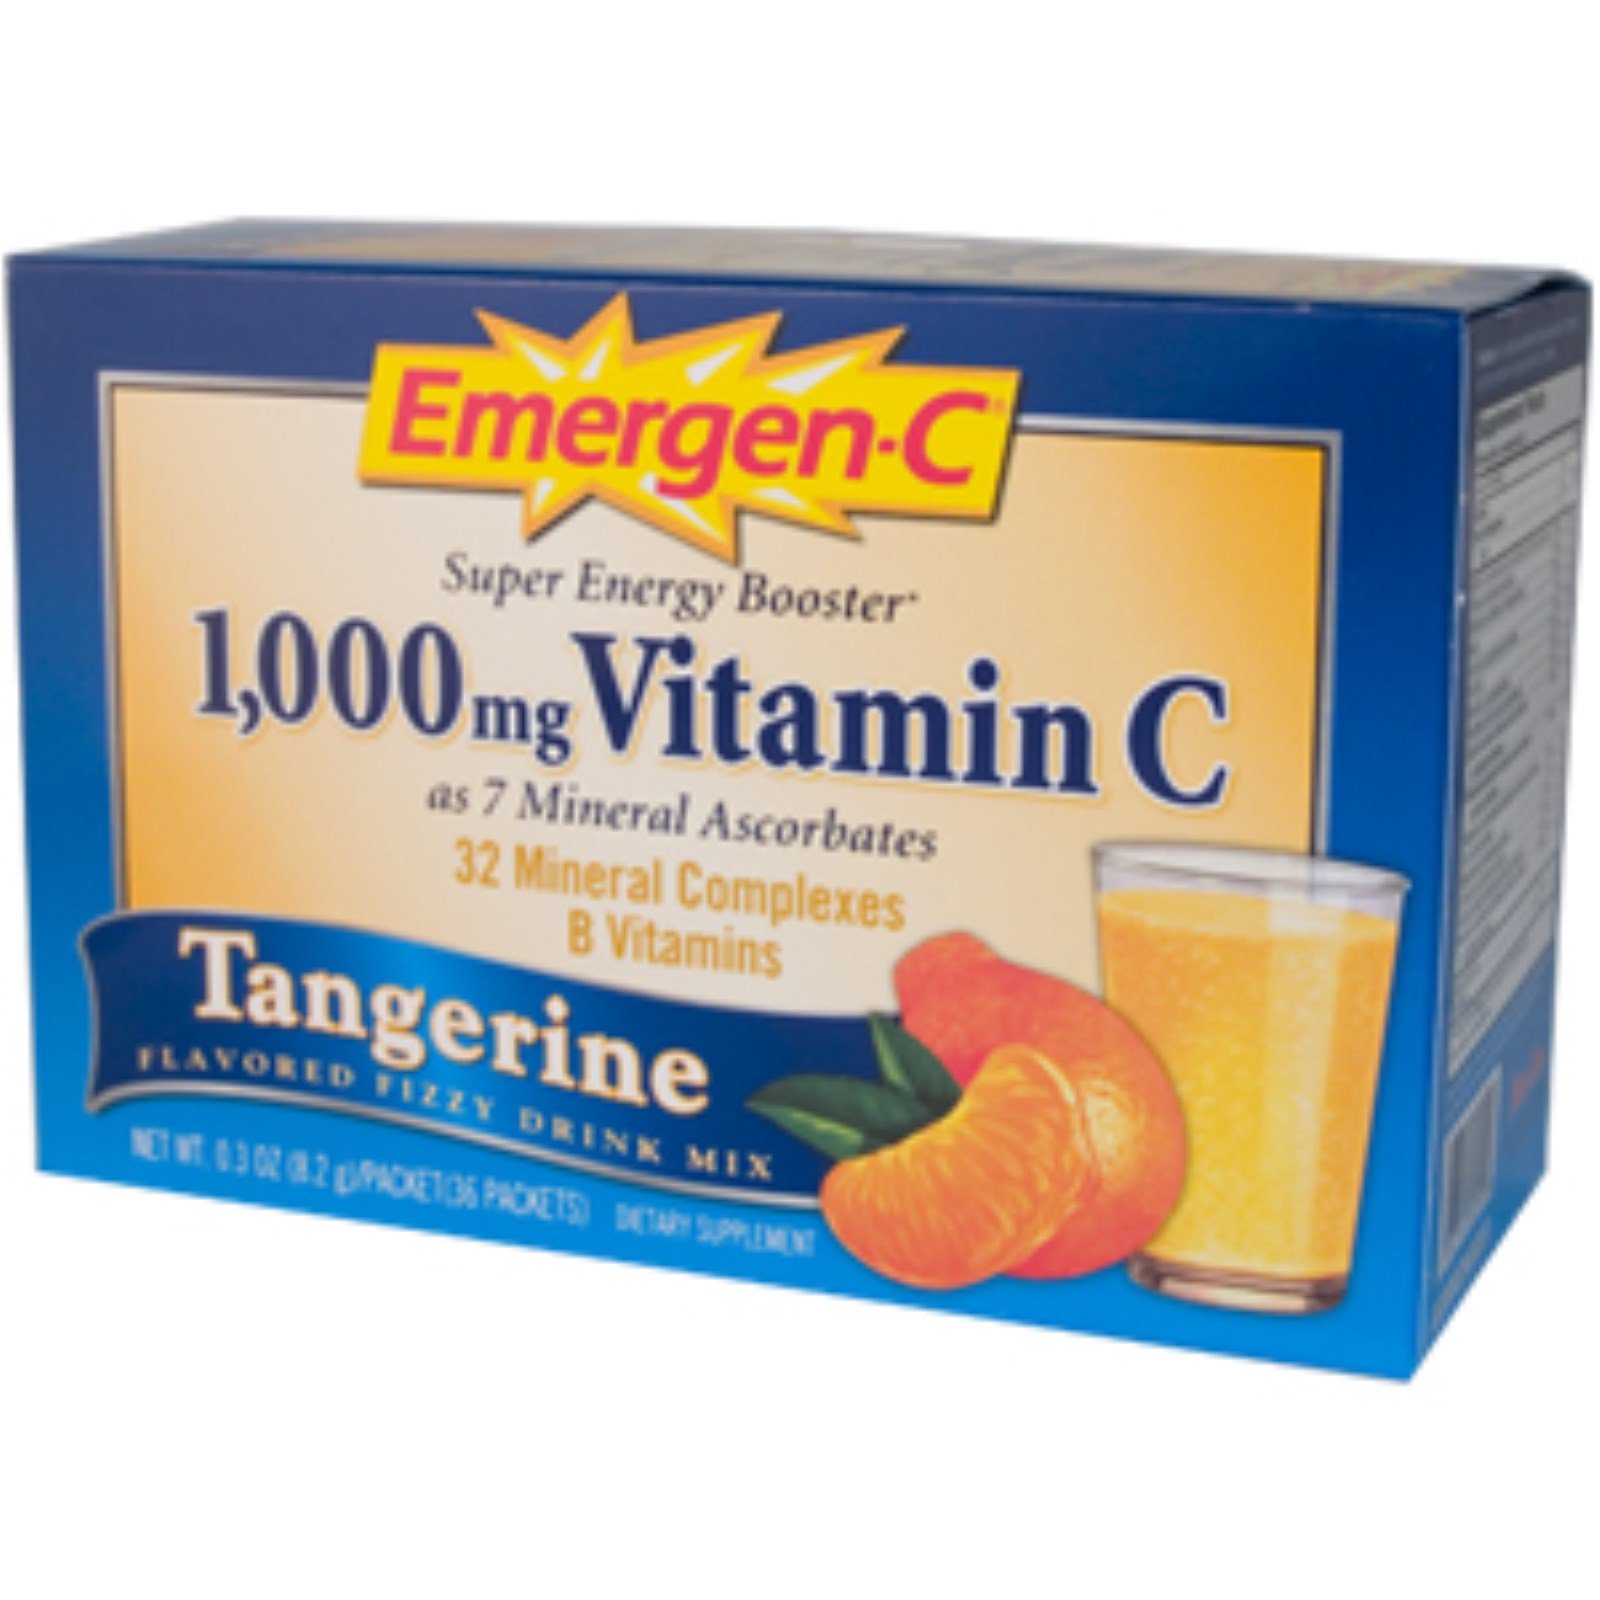 Мандарин 36. Тангерин витамин с. Emergen-c Packets. Atomic Tangerine. Мини ворлд Tangerine.